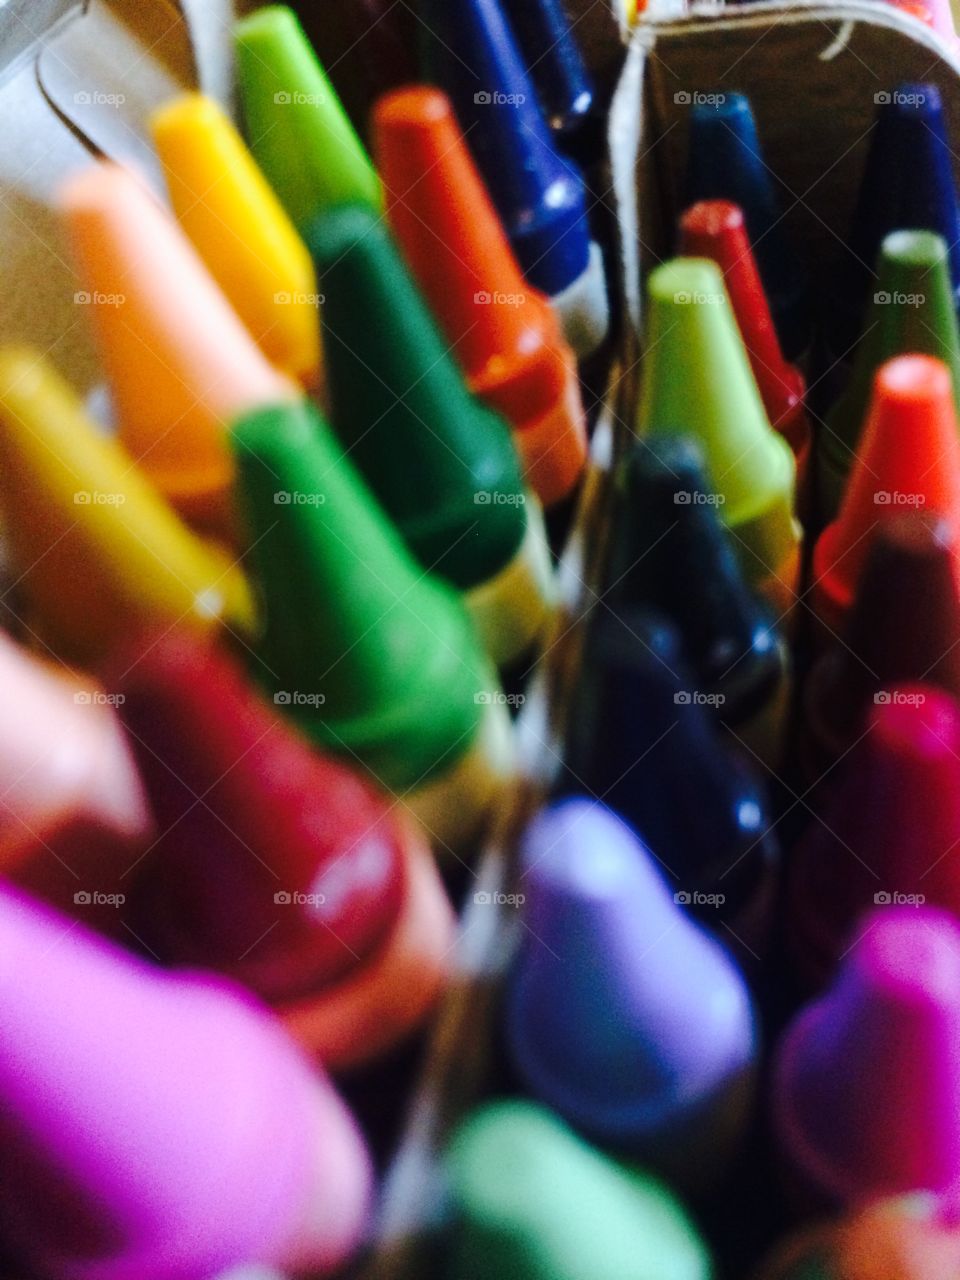 New crayons